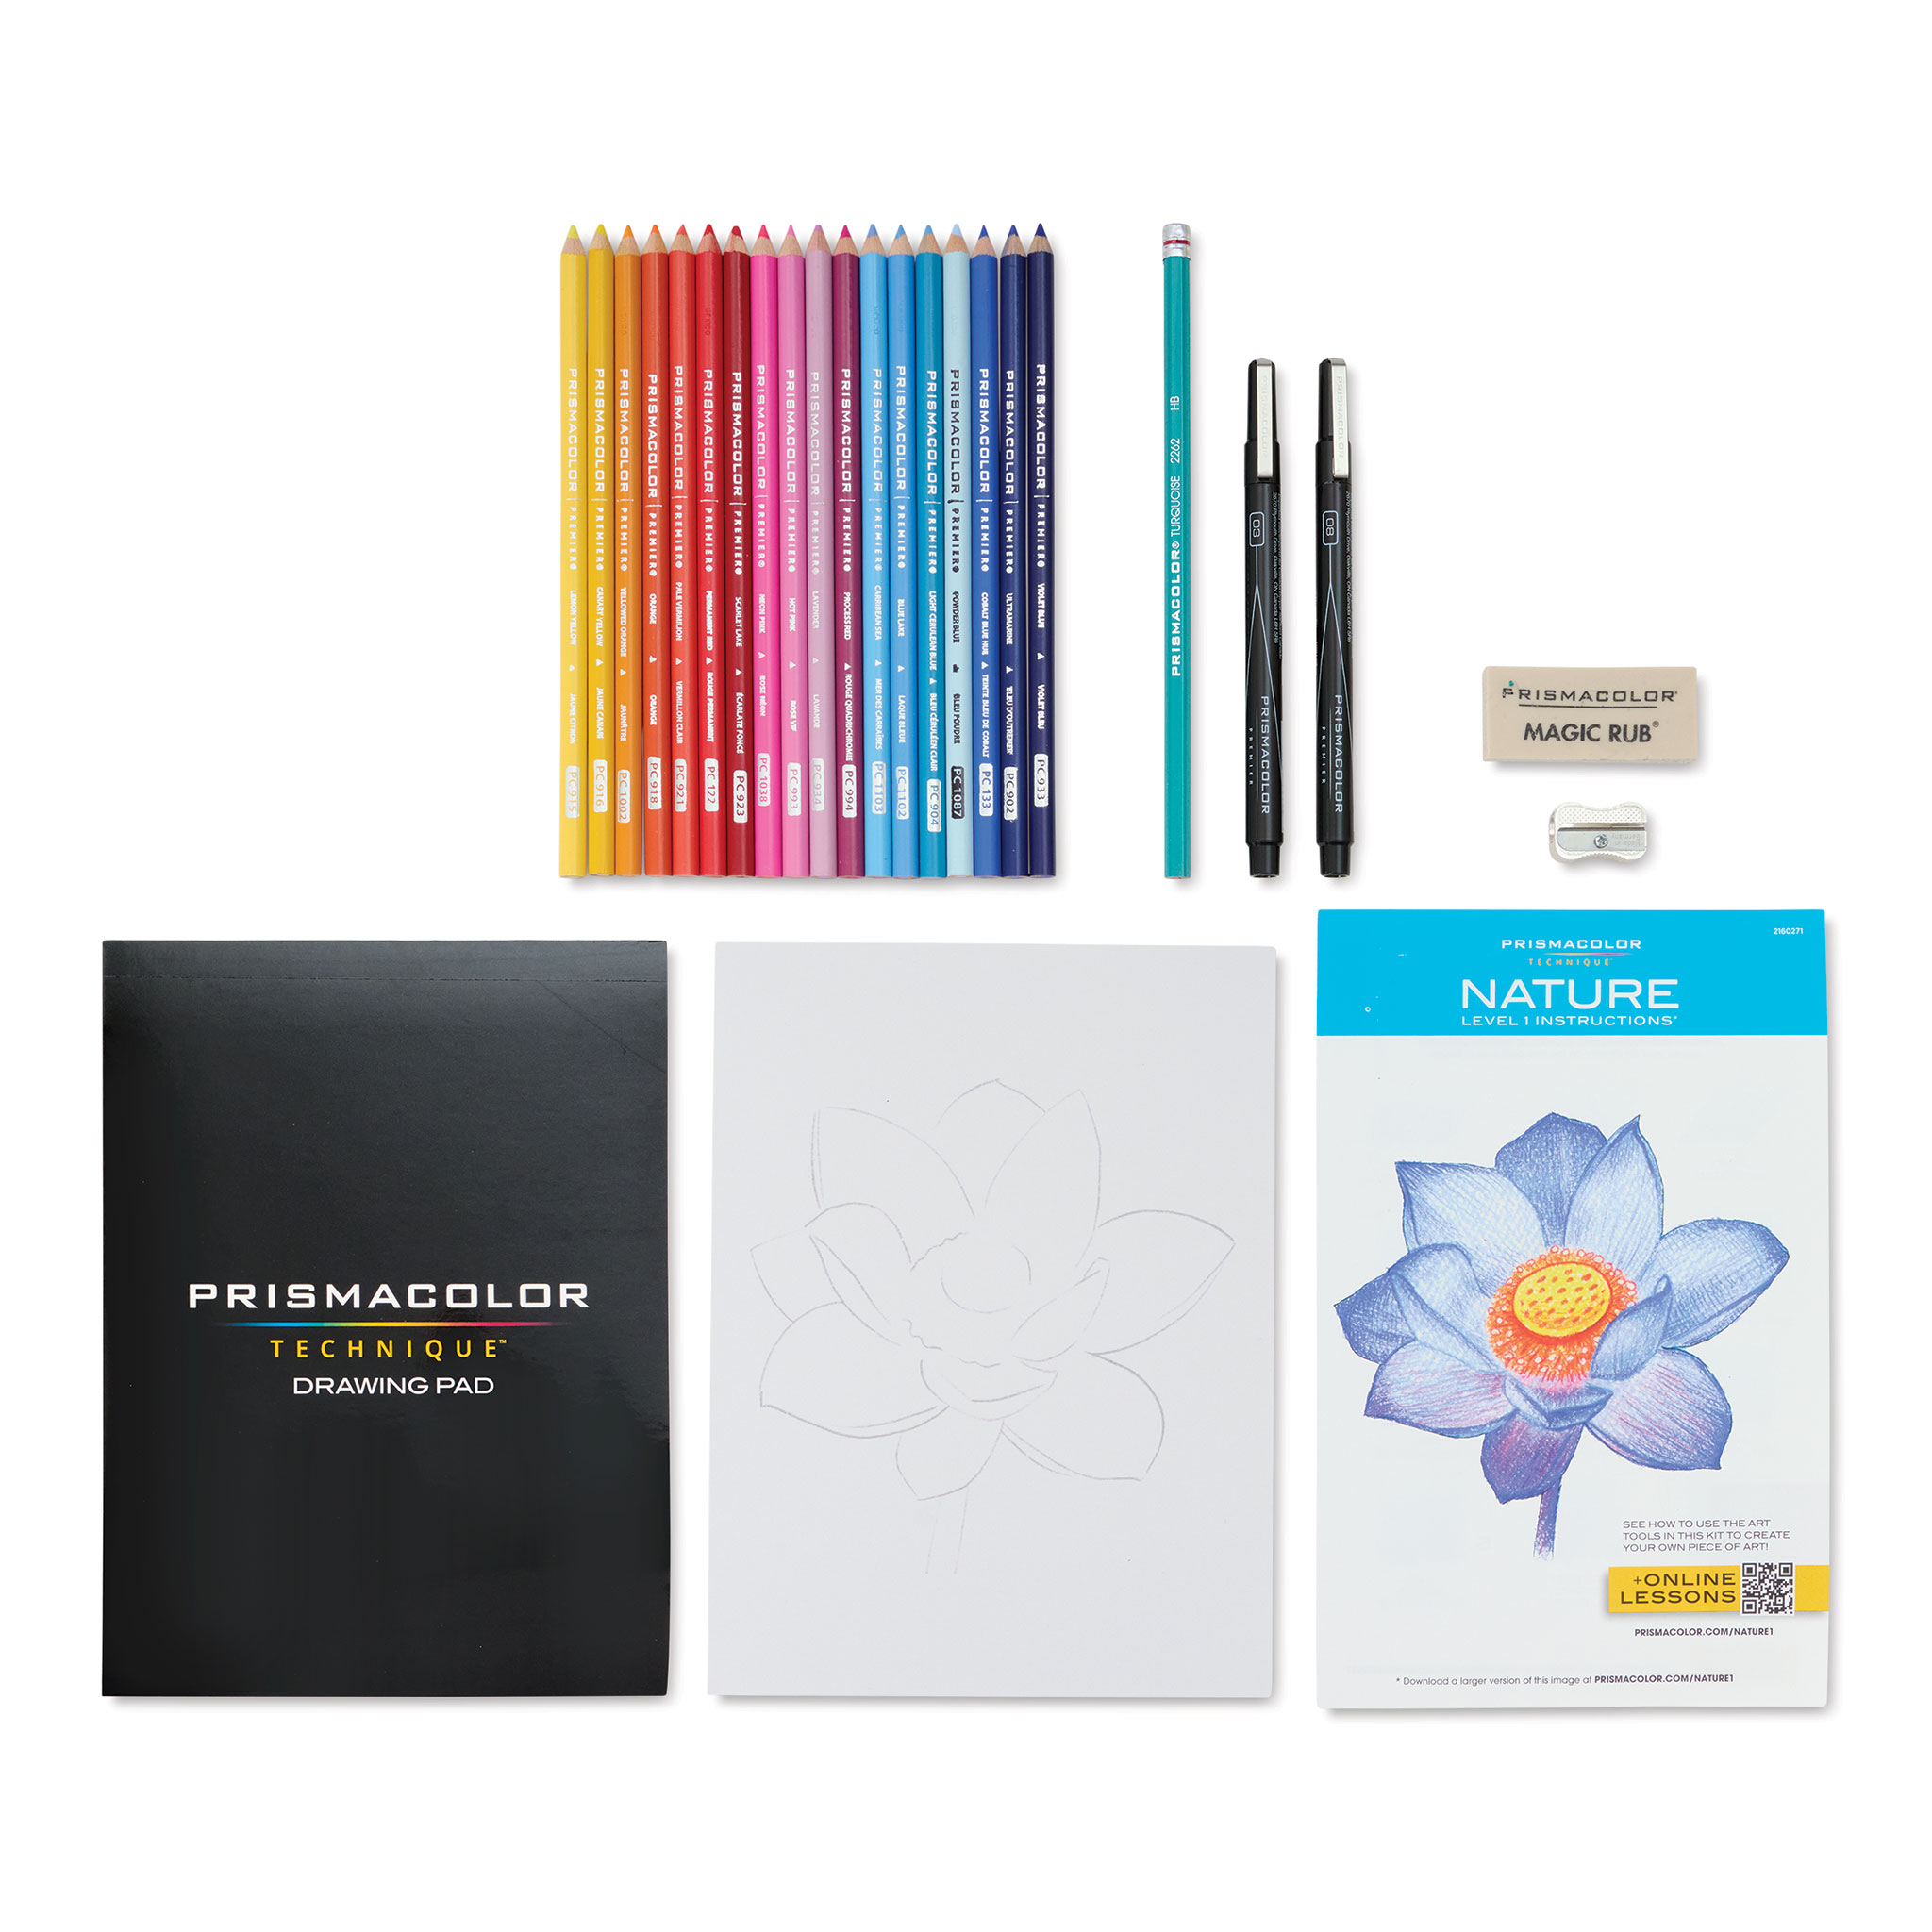 Sanford Prismacolor Sketch Kit - GS Direct, Inc.